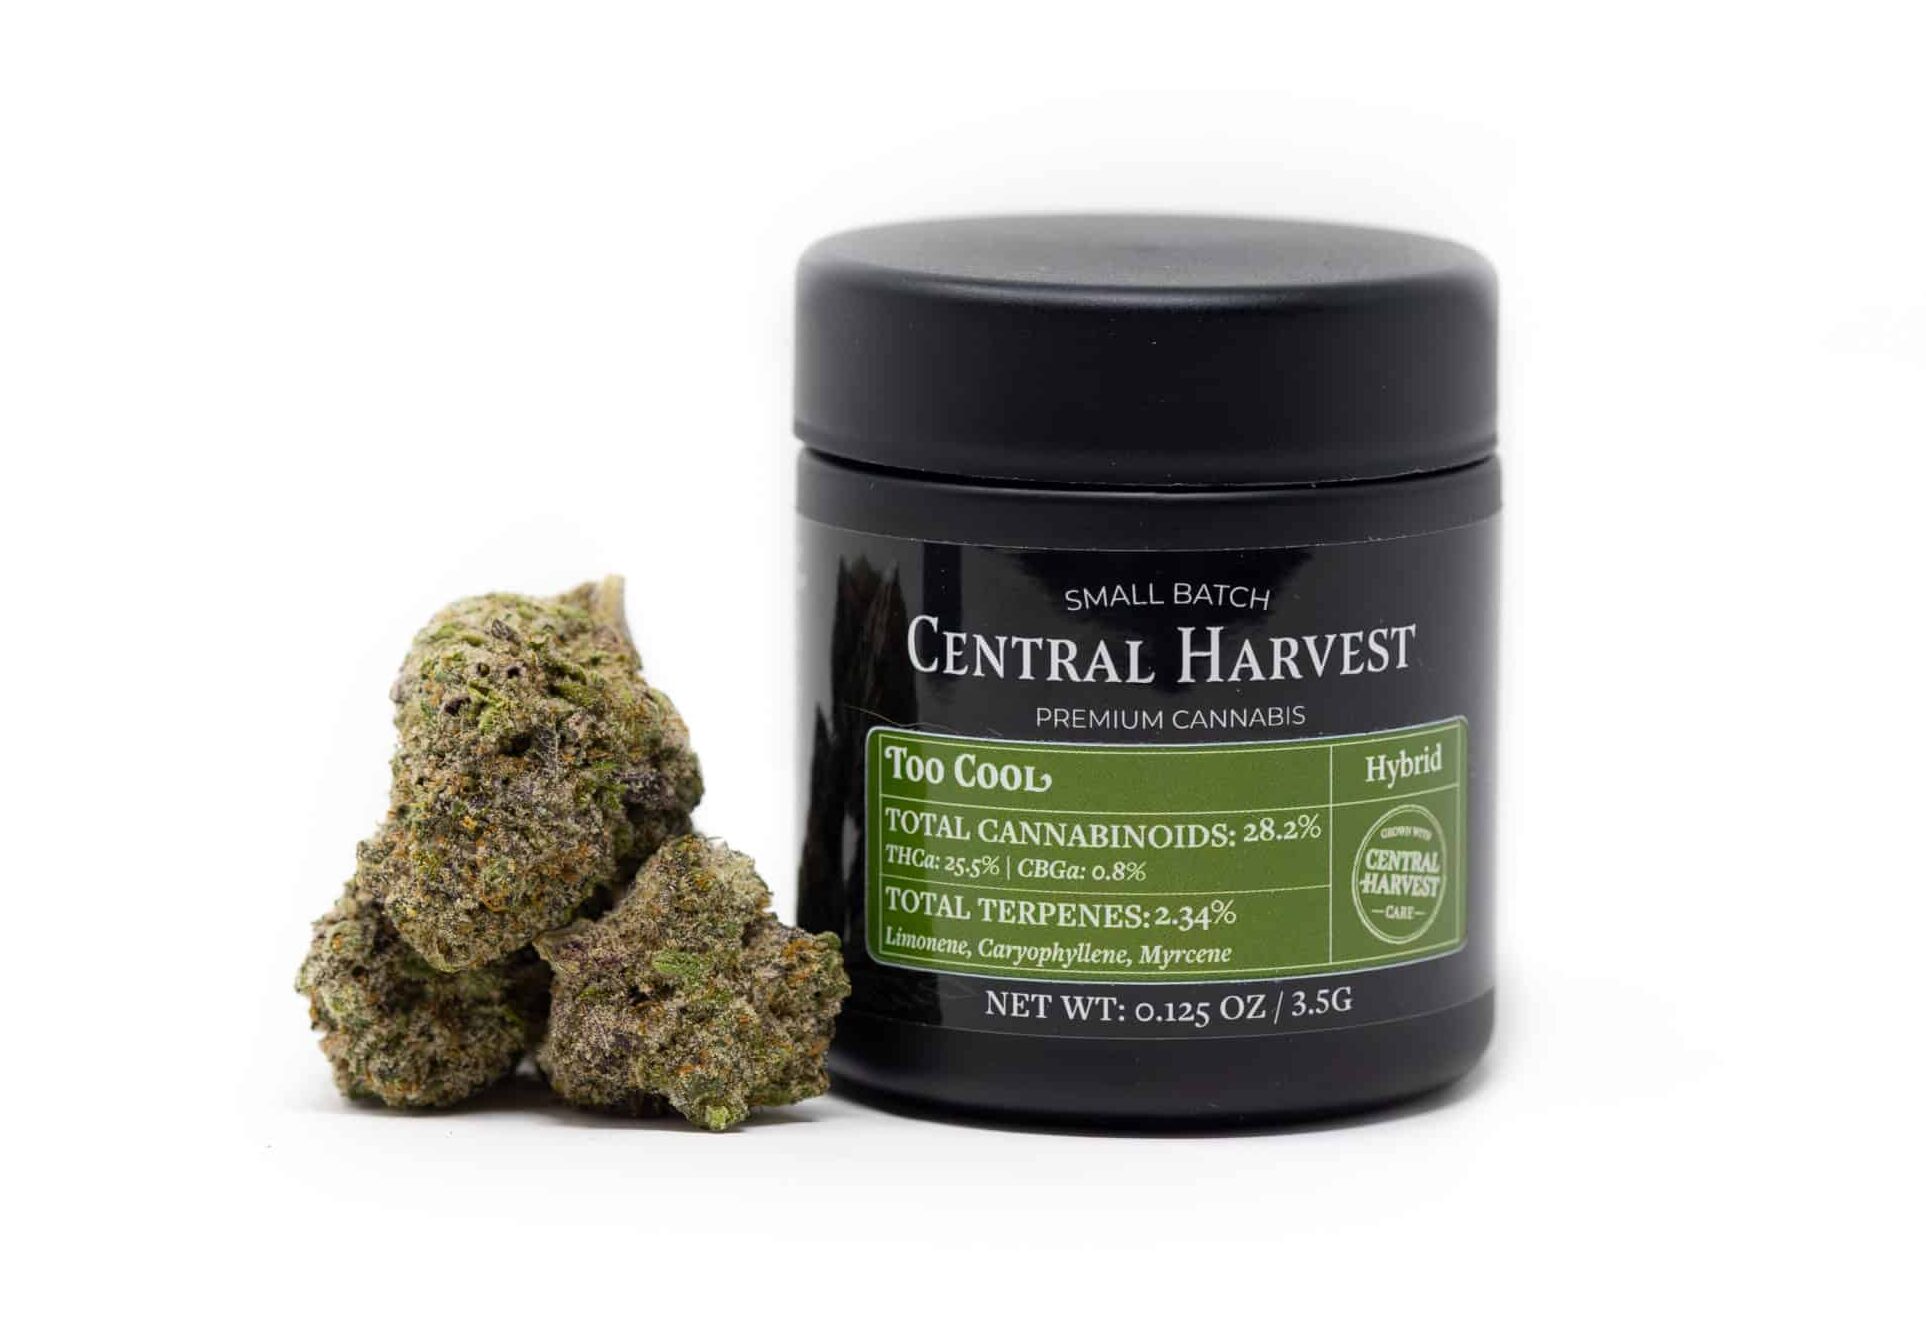 Too Cool a Hybrid Cannabis strain grown by Central Harvest